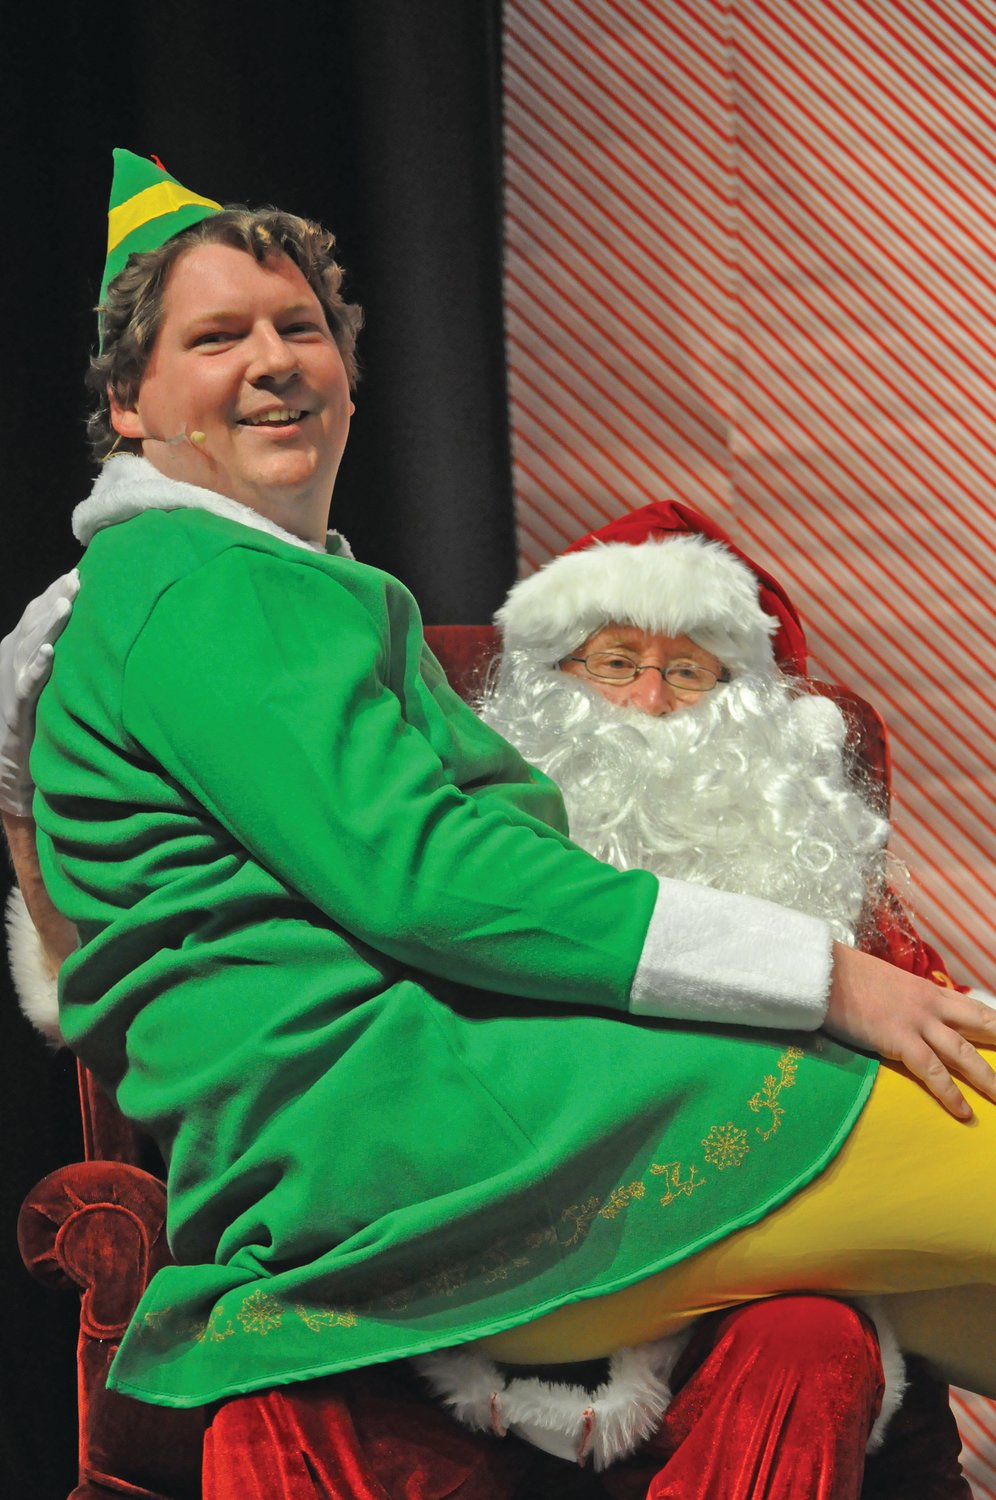 Brian Swick (Buddy) sits on Santa